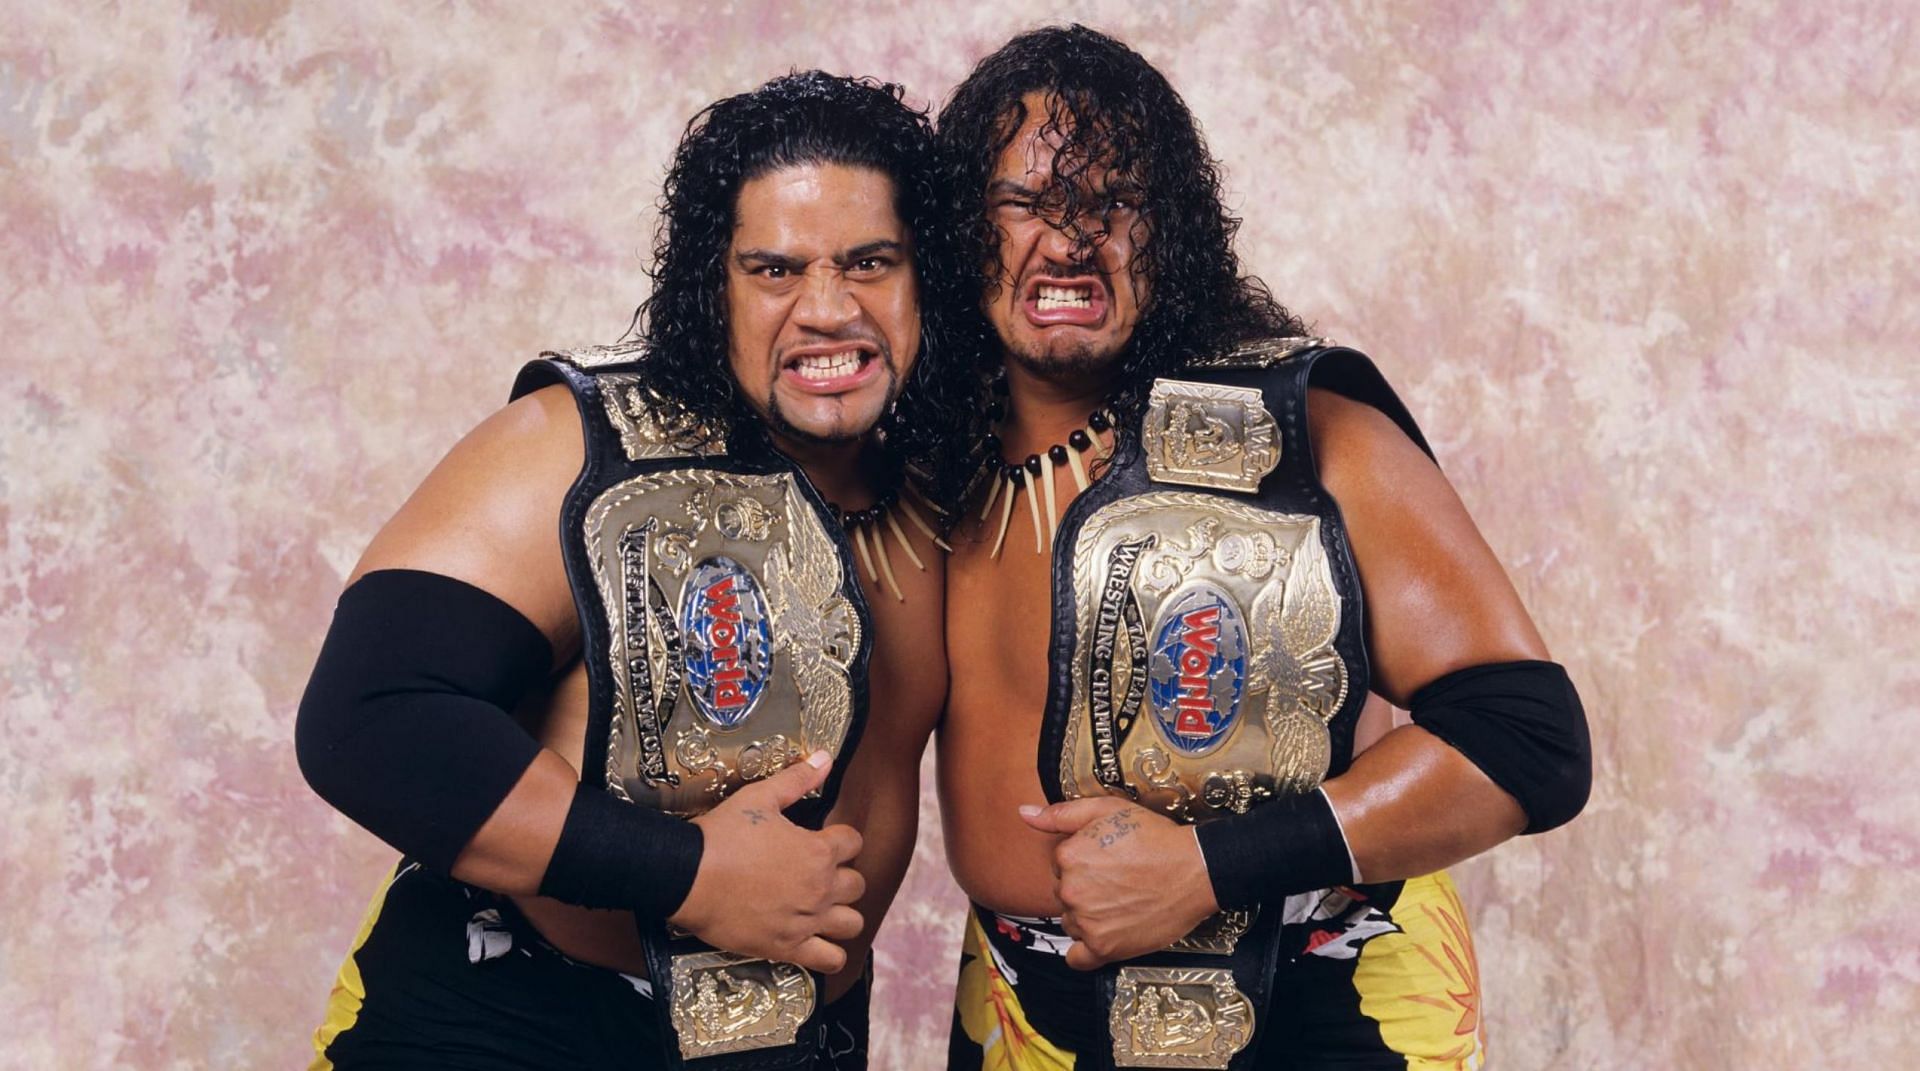 Samu and Fatu are former WWE Tag Team Champions